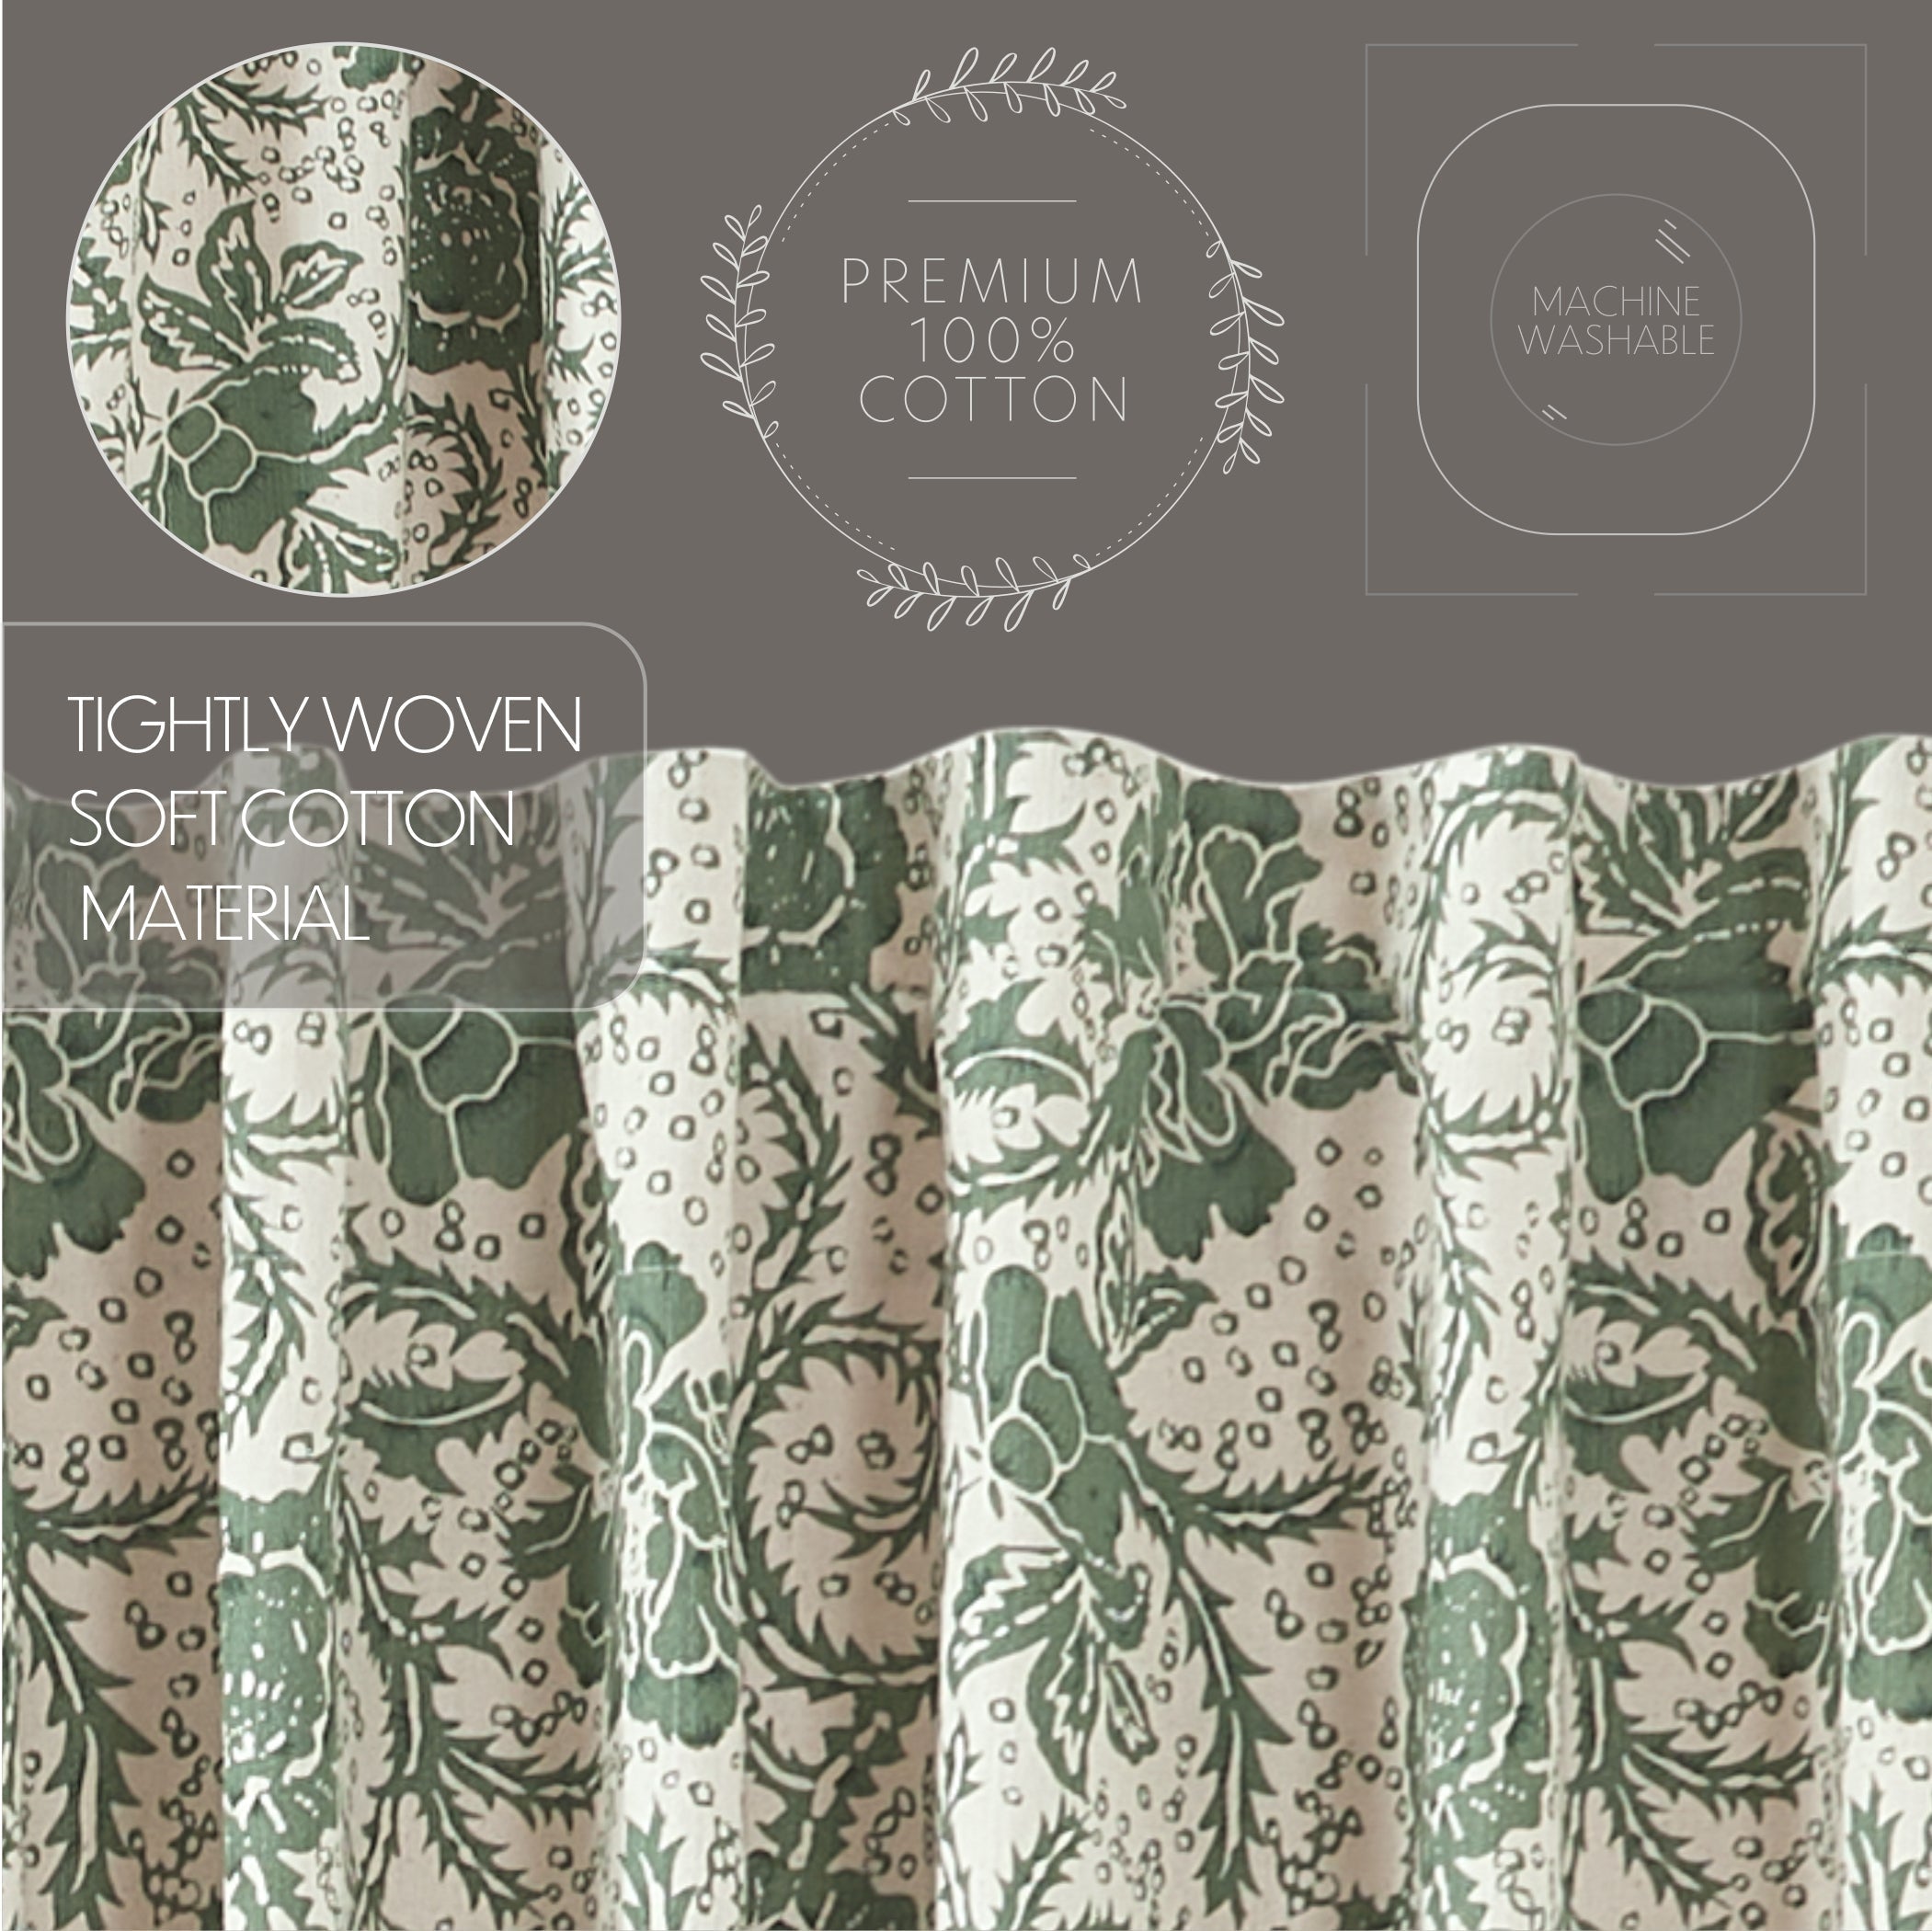 Dorset Green Floral Prairie Long Panel Curtain Set of 2 84x36x18 VHC Brands